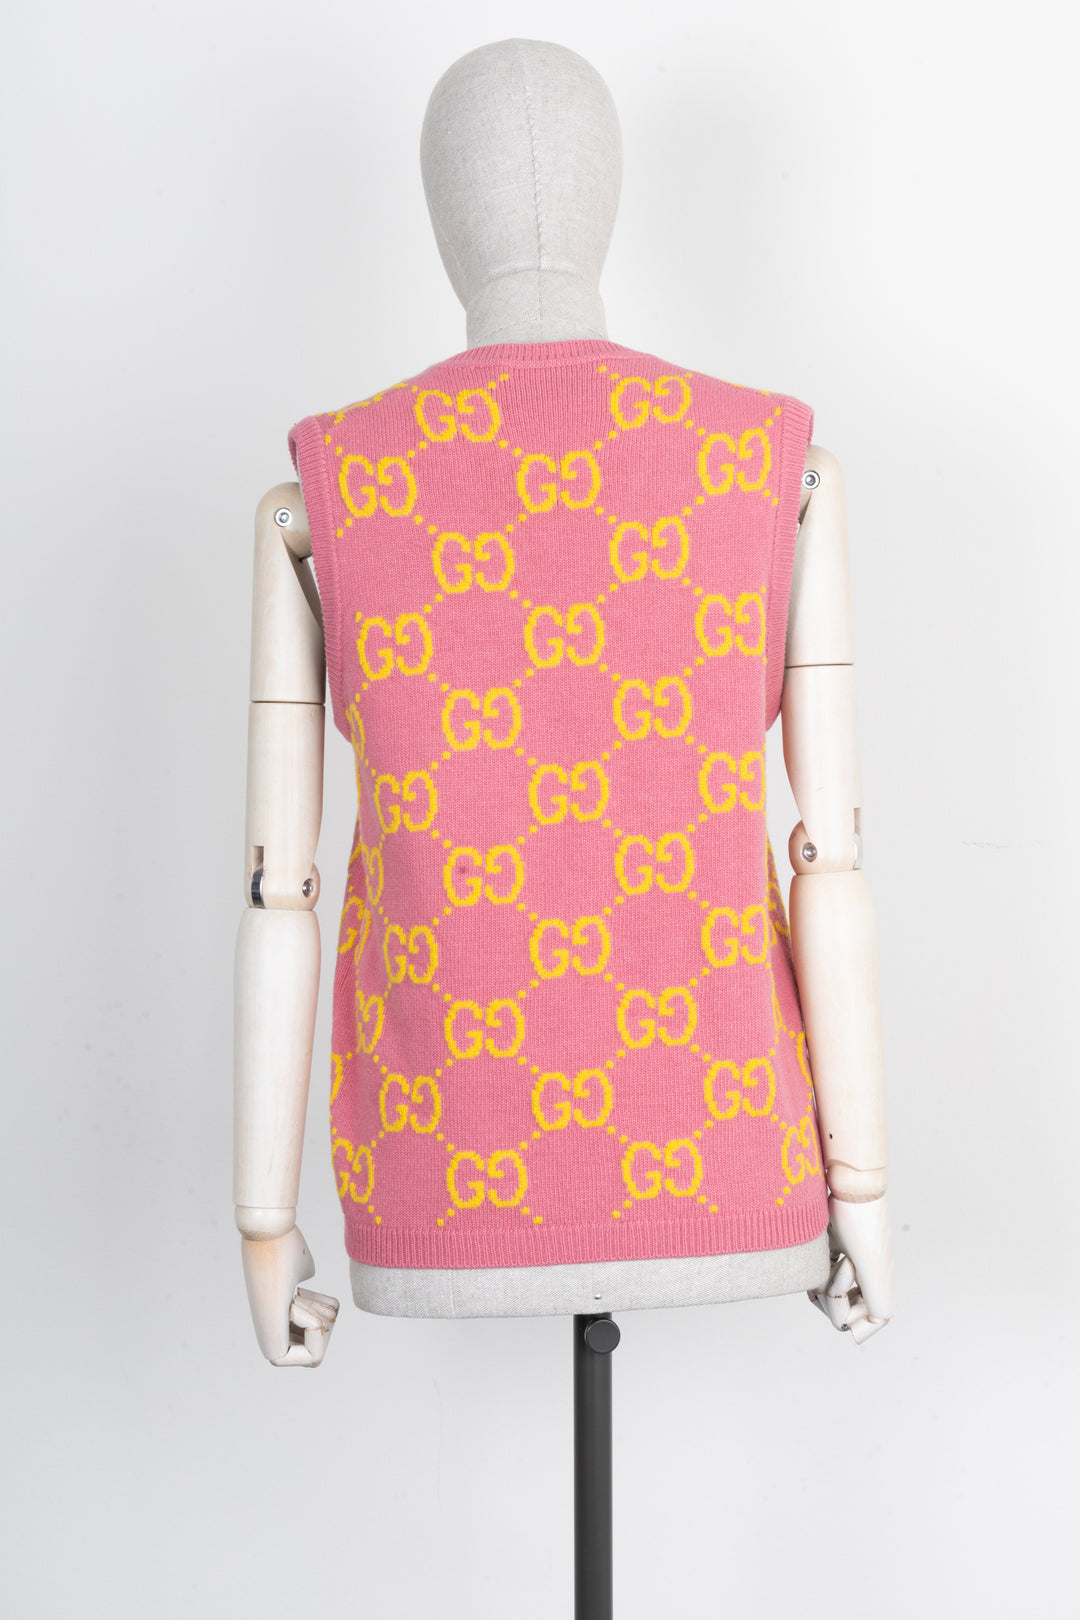 GUCCI GG Knit Vest Wool Pink